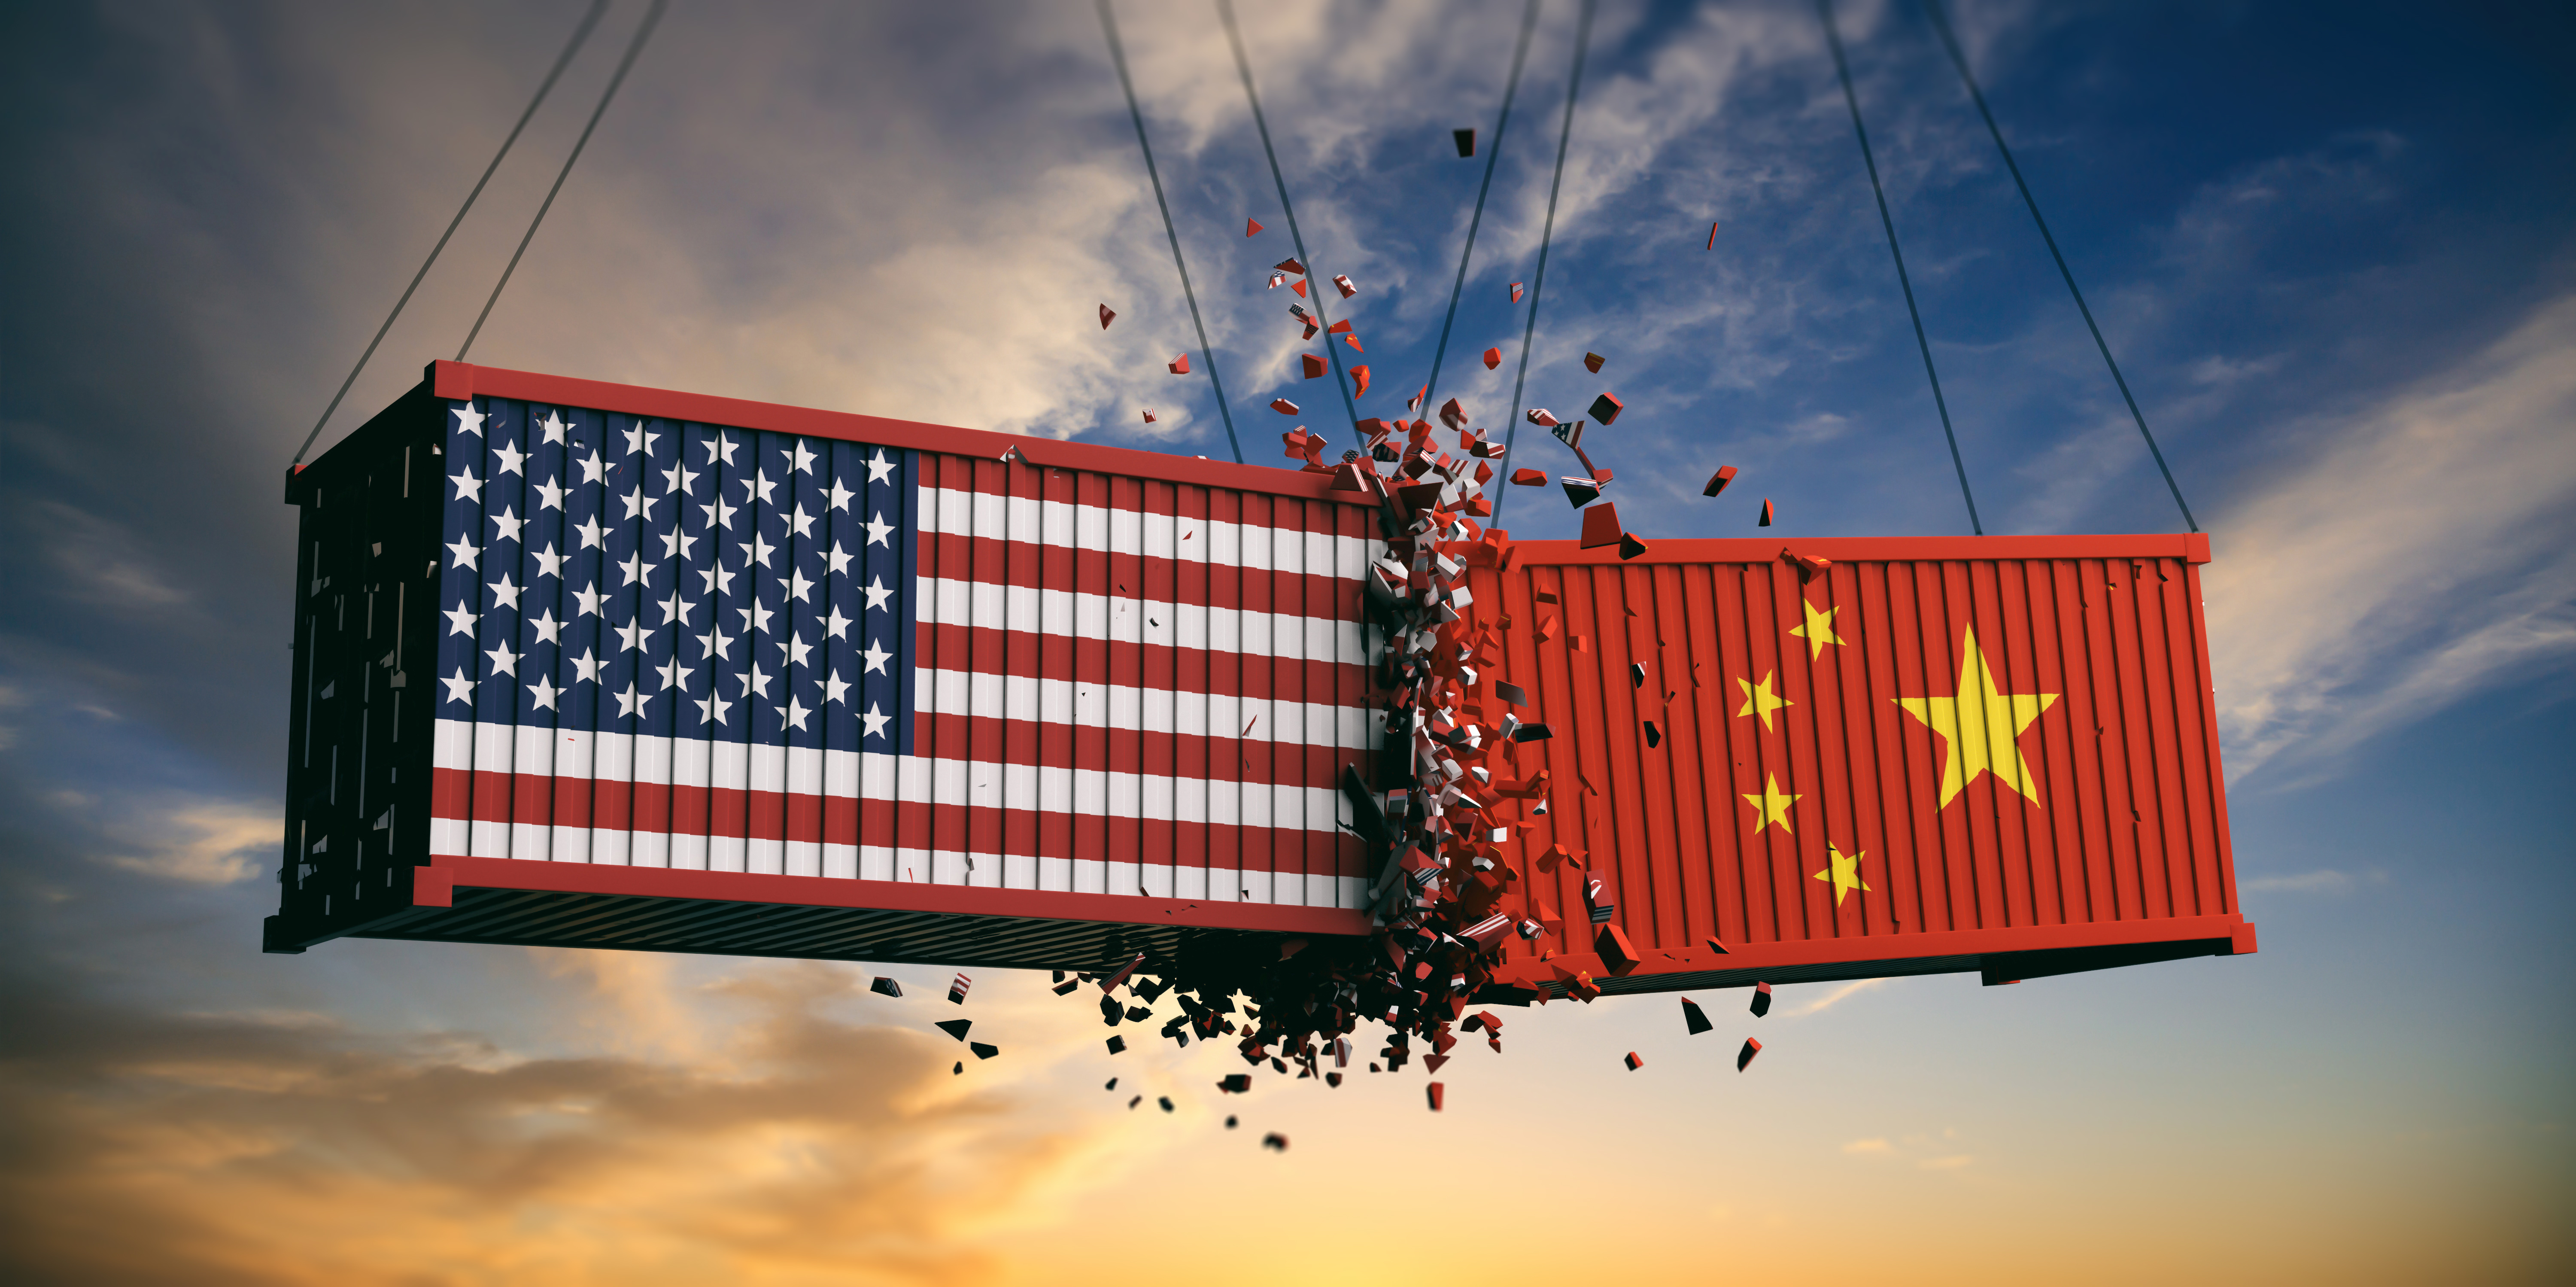 Chinese/US trade disputes